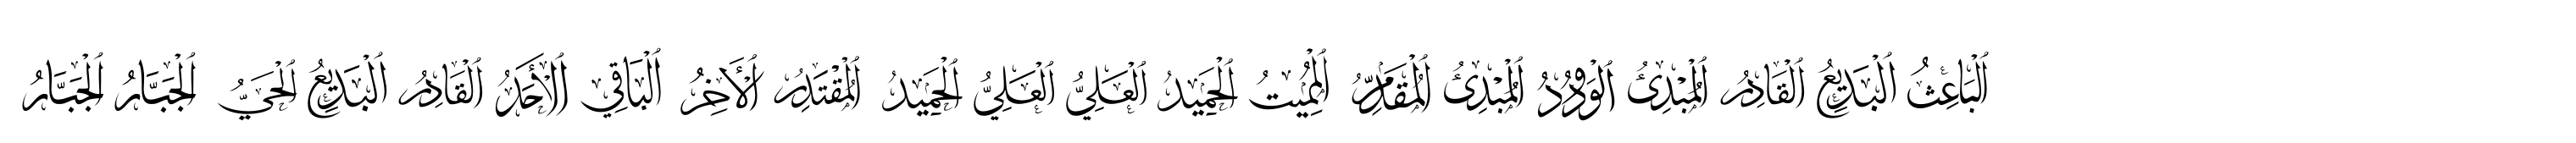 99 Names of ALLAH Minimal